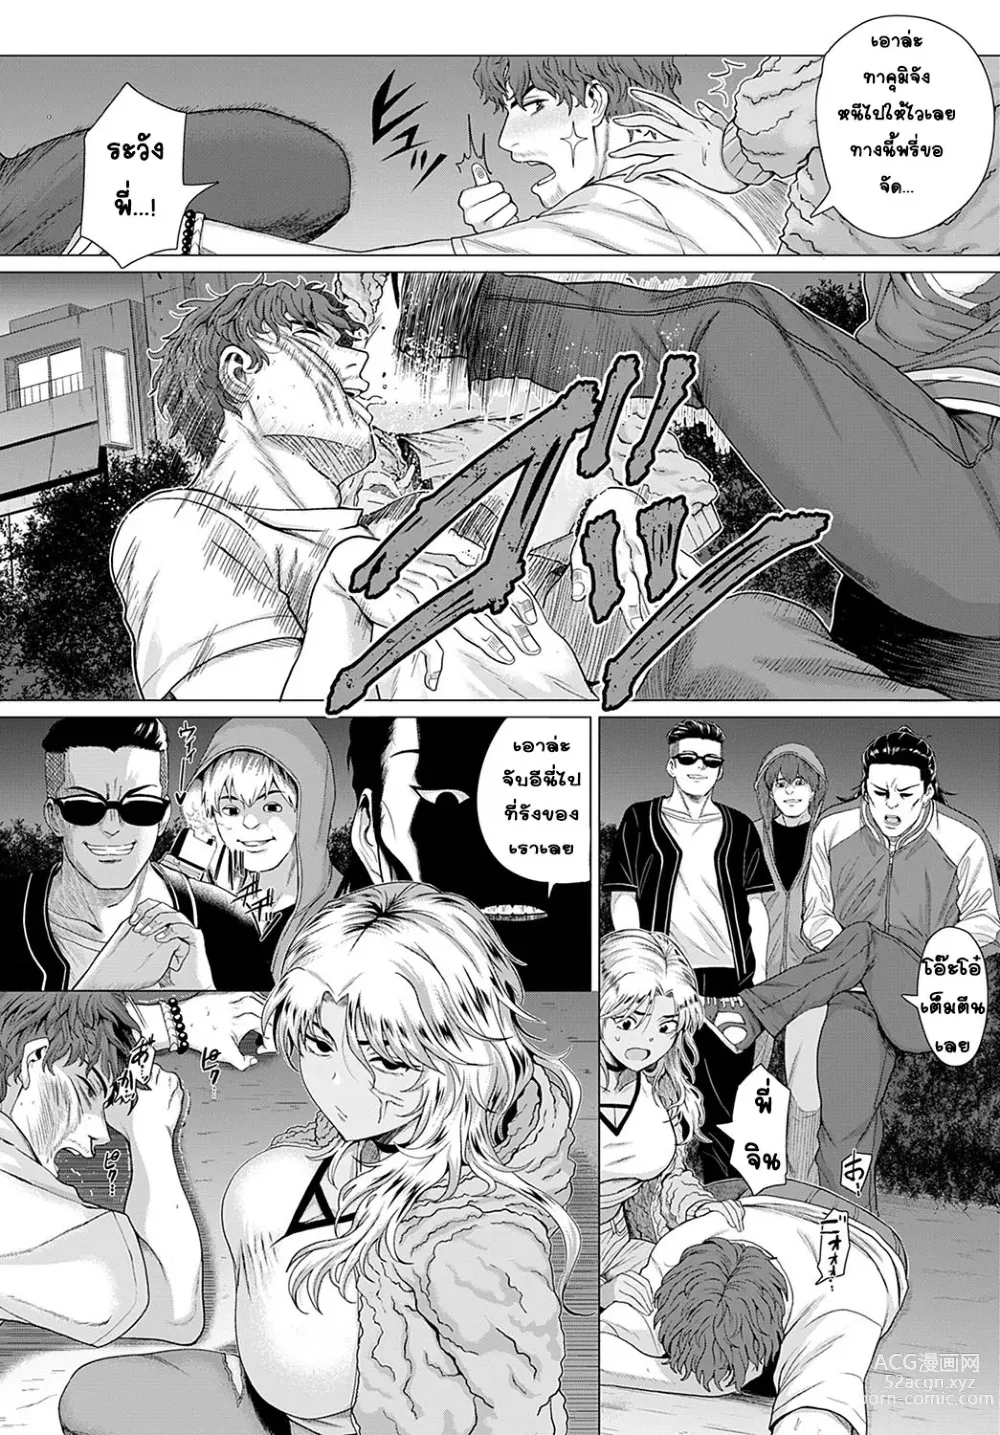 Page 6 of manga Douzo, Okawarinaku.